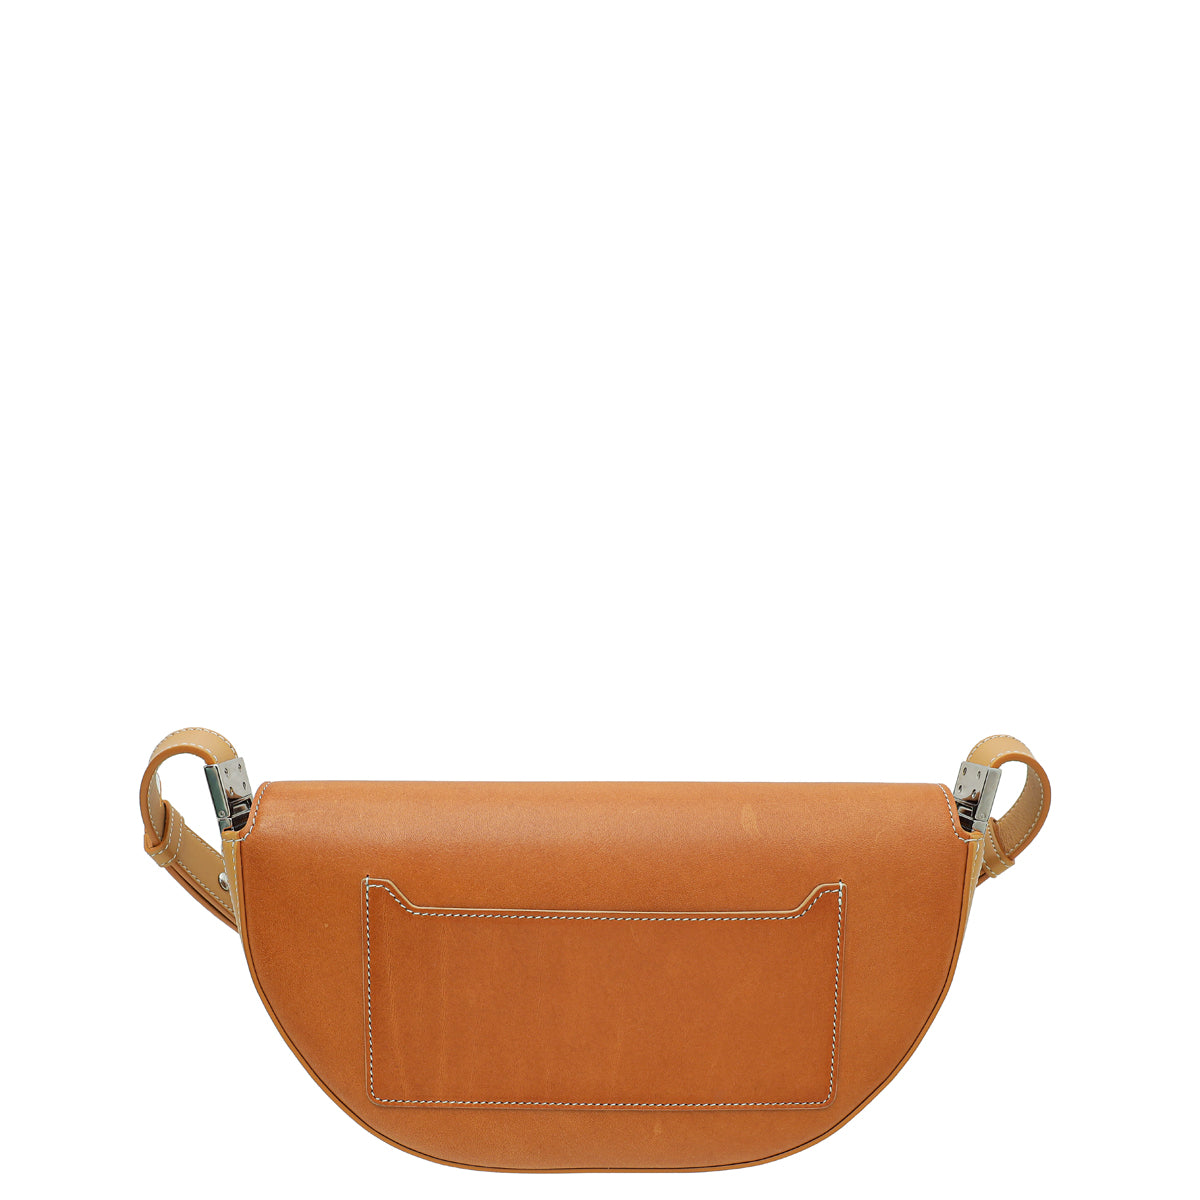 BBR Bags - Heidi Mabel 173 | Burberry bag, Burberry, Burberry tote bag